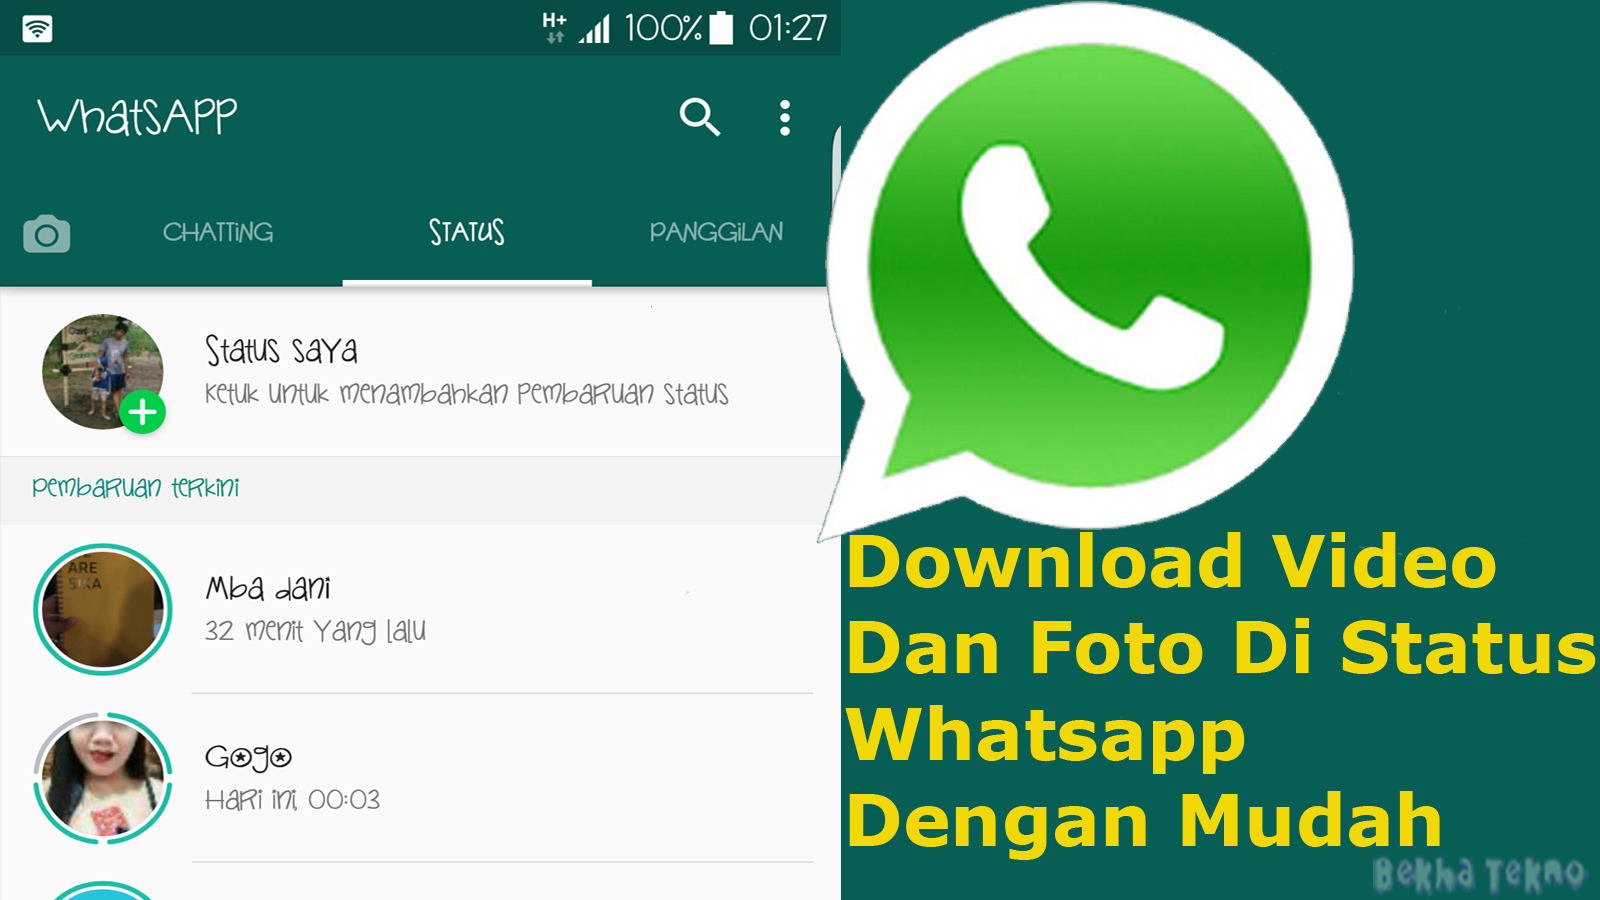 Whatsapp status video download